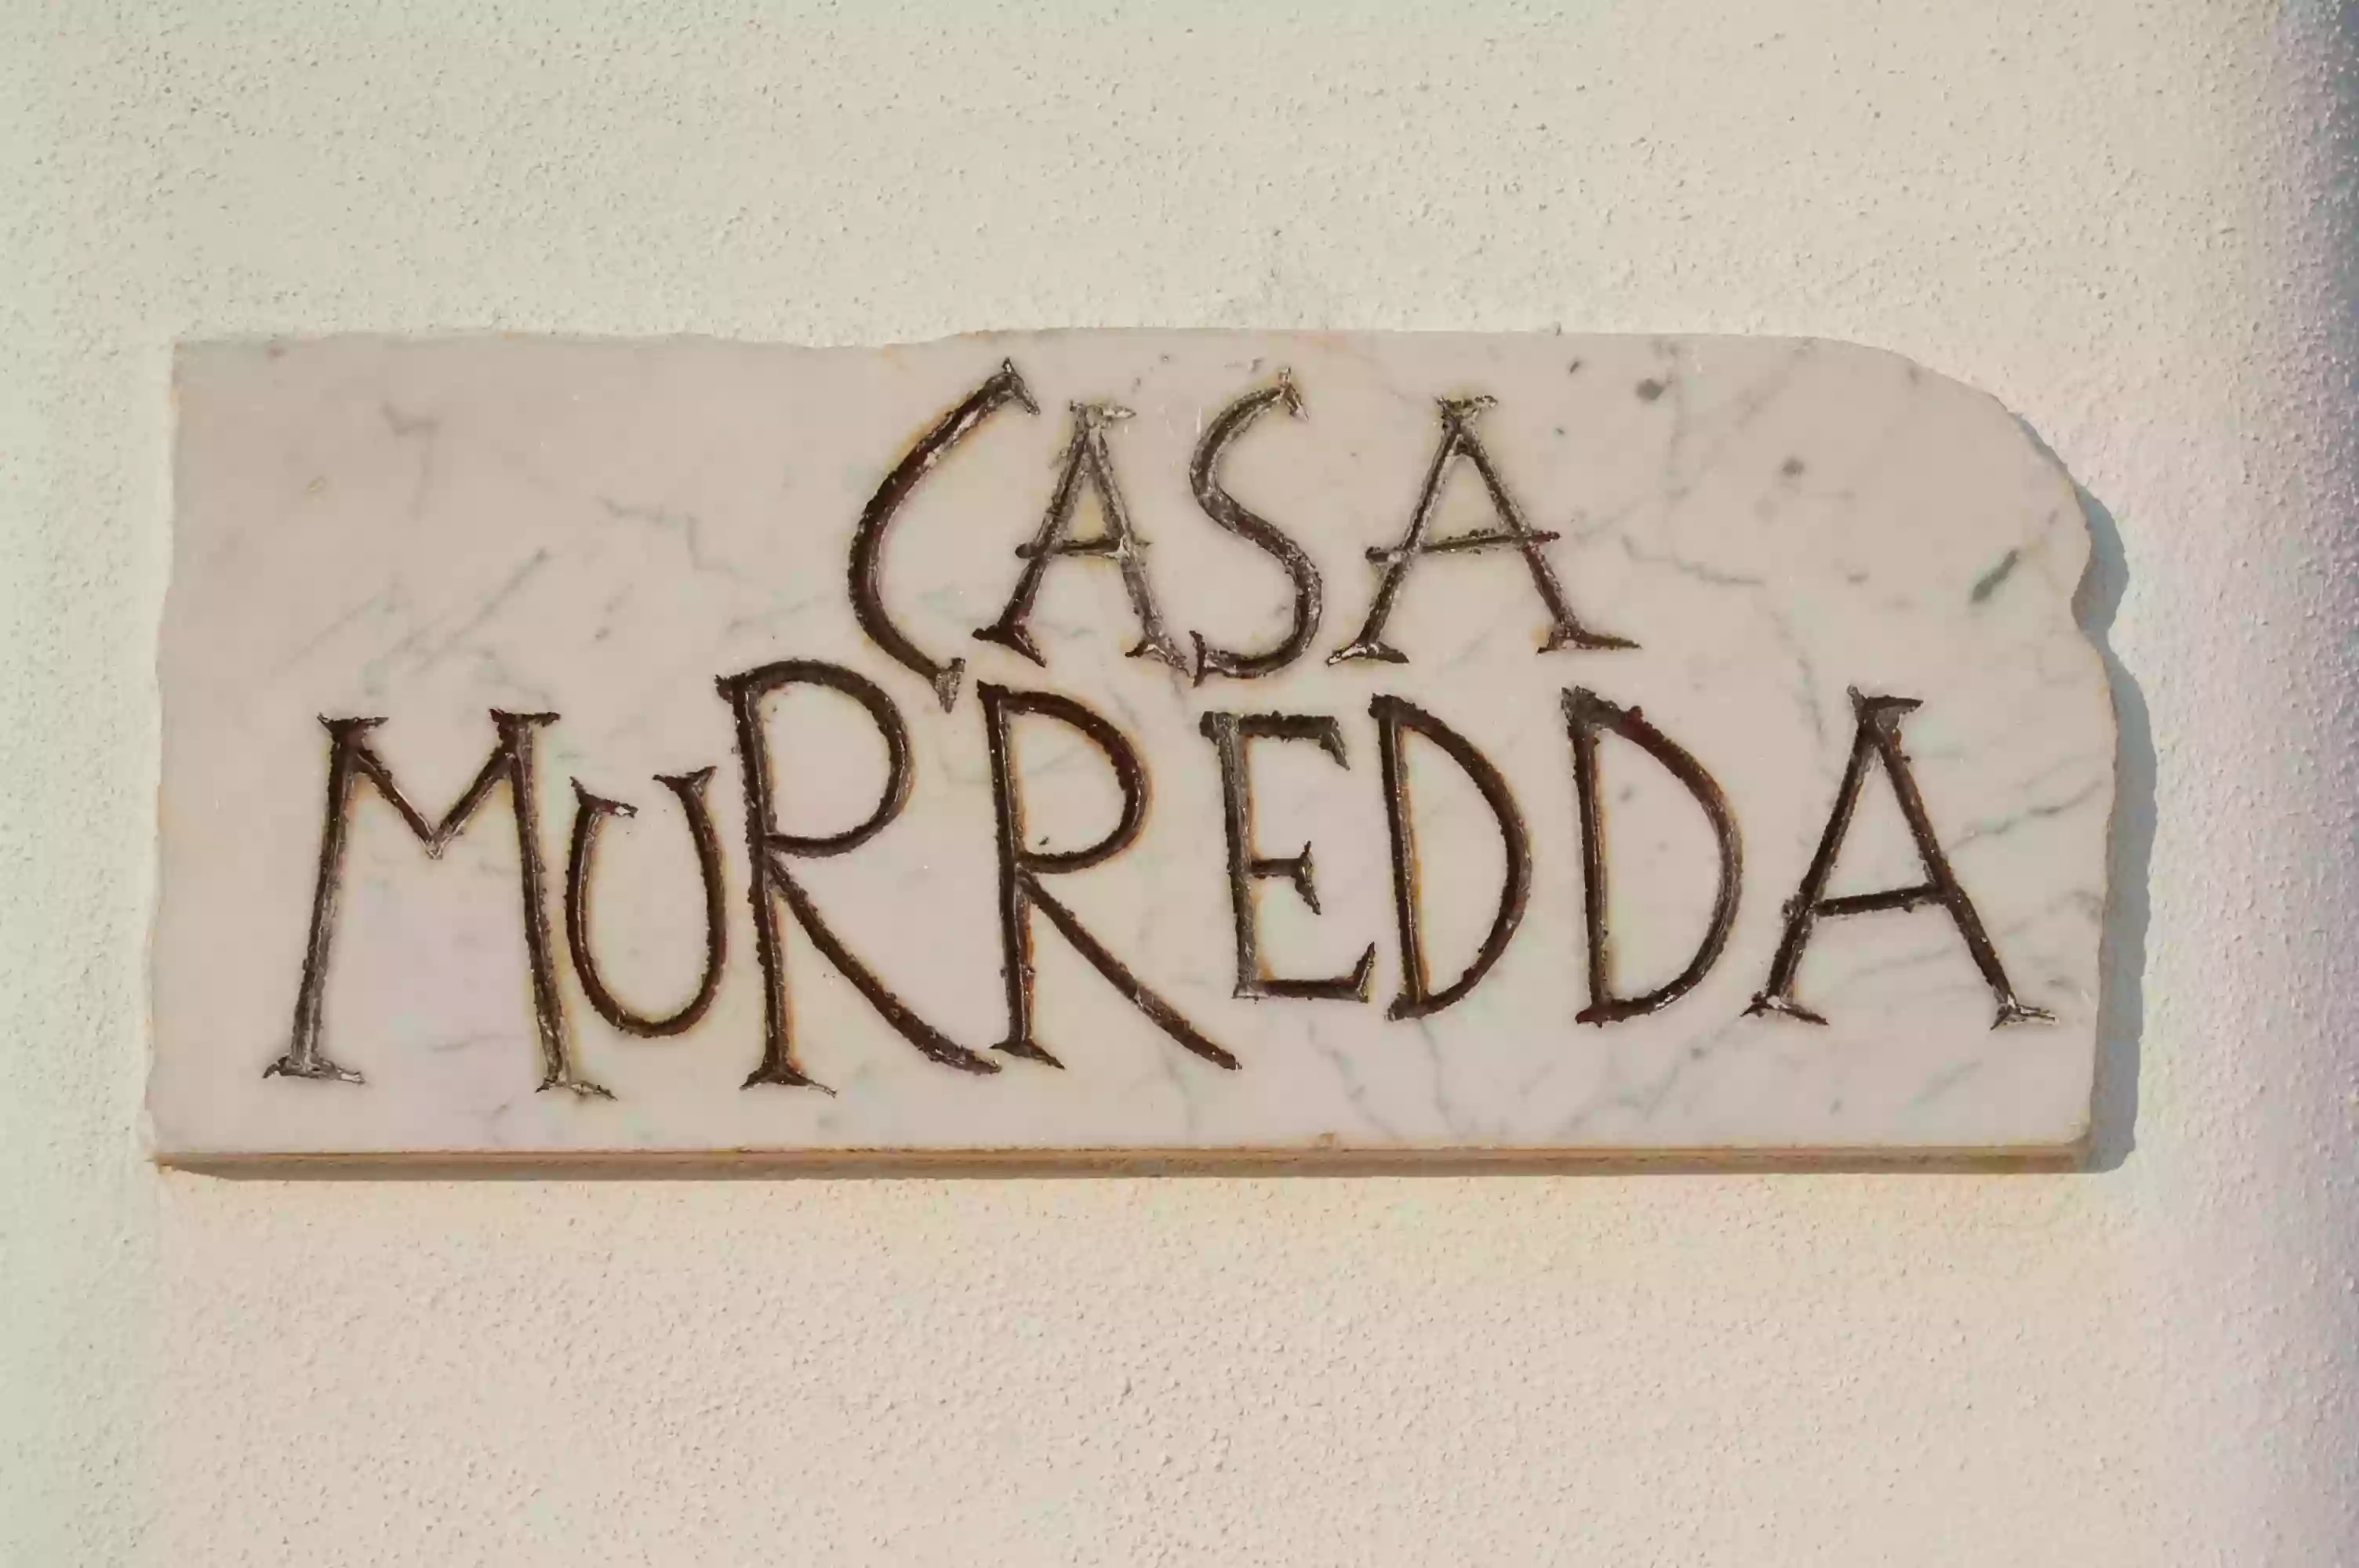 Casa Murredda